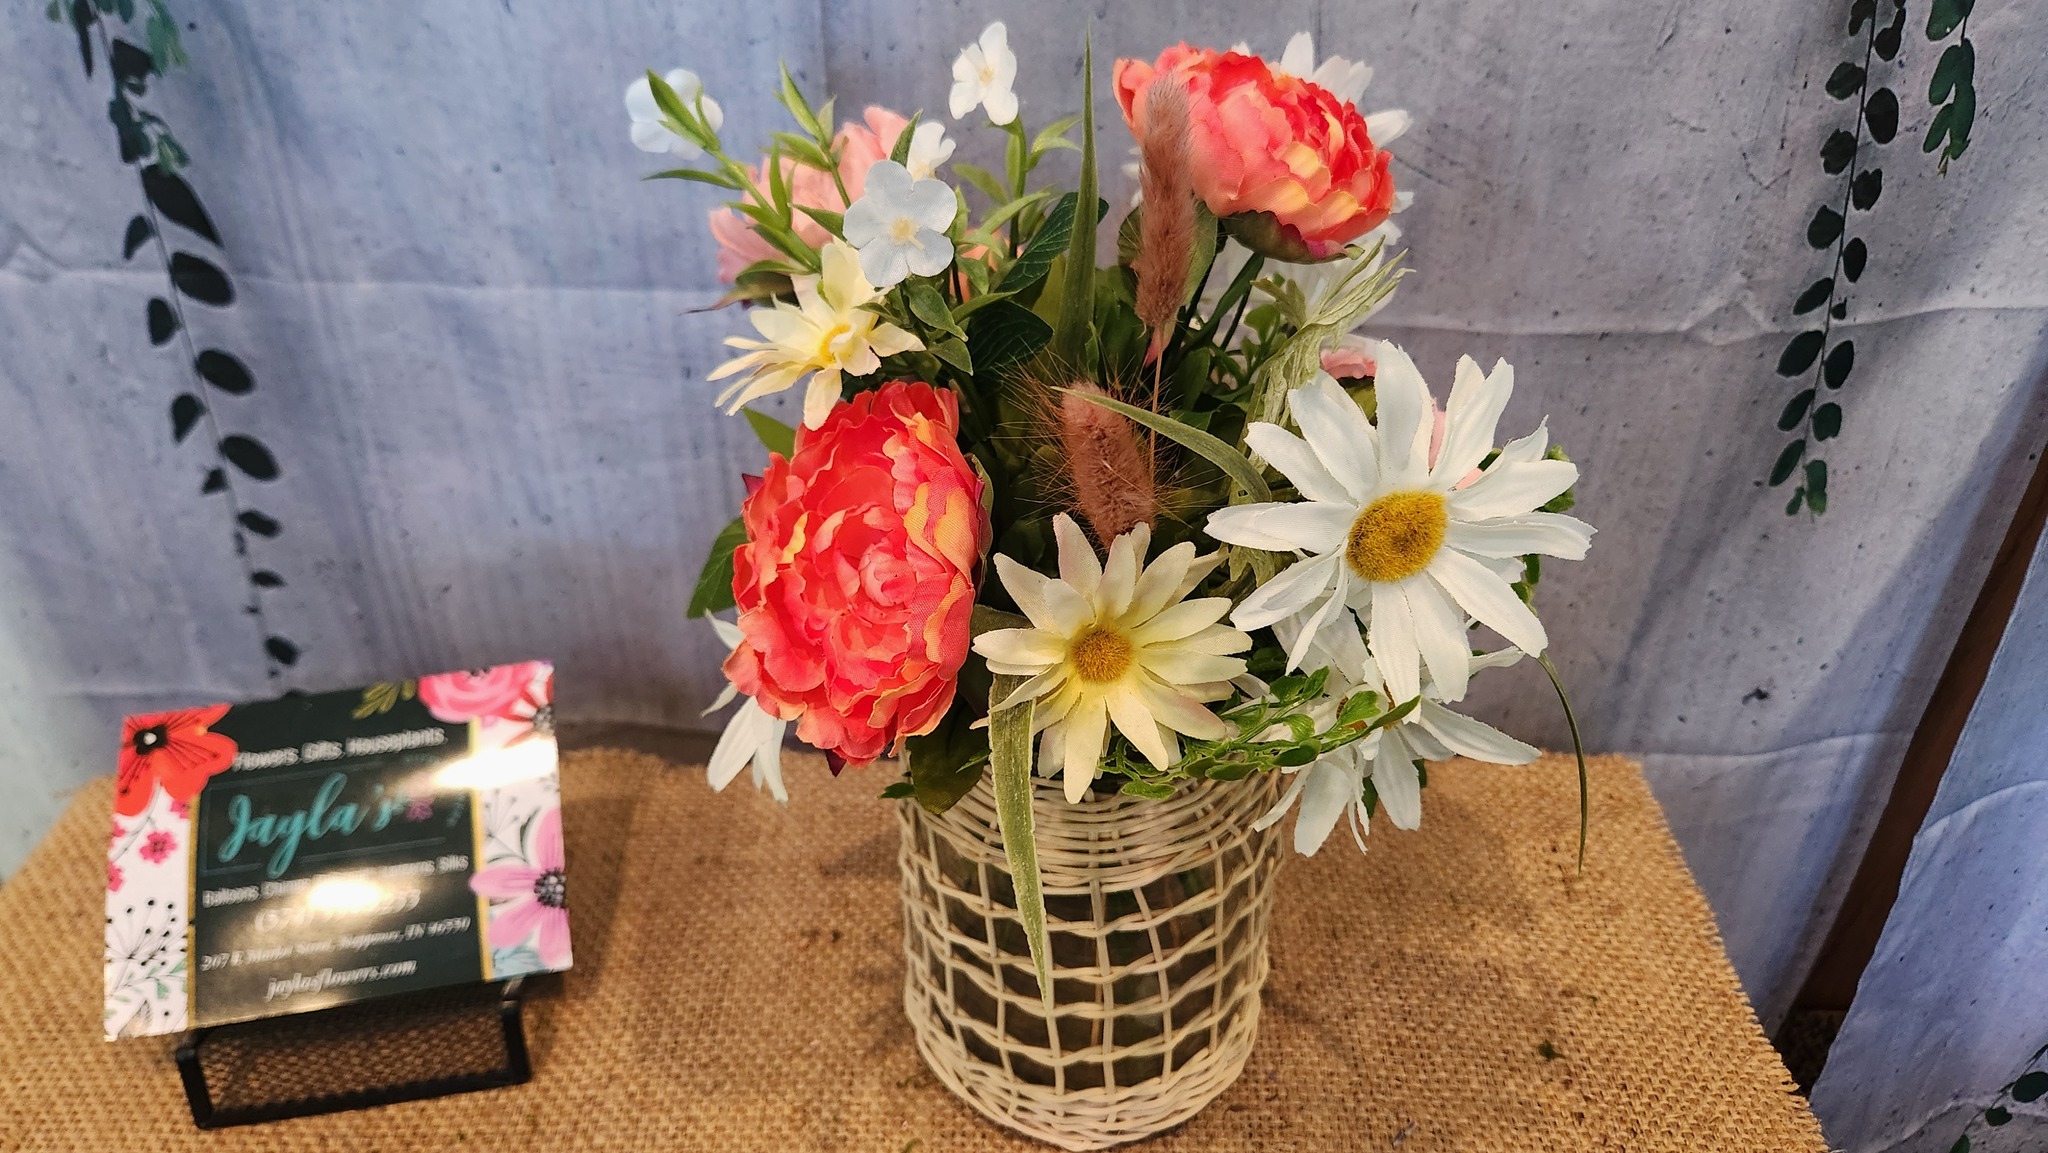 Jayla's Flowers, Gifts, Plants 207 E Market St UNIT B, Nappanee Indiana 46550